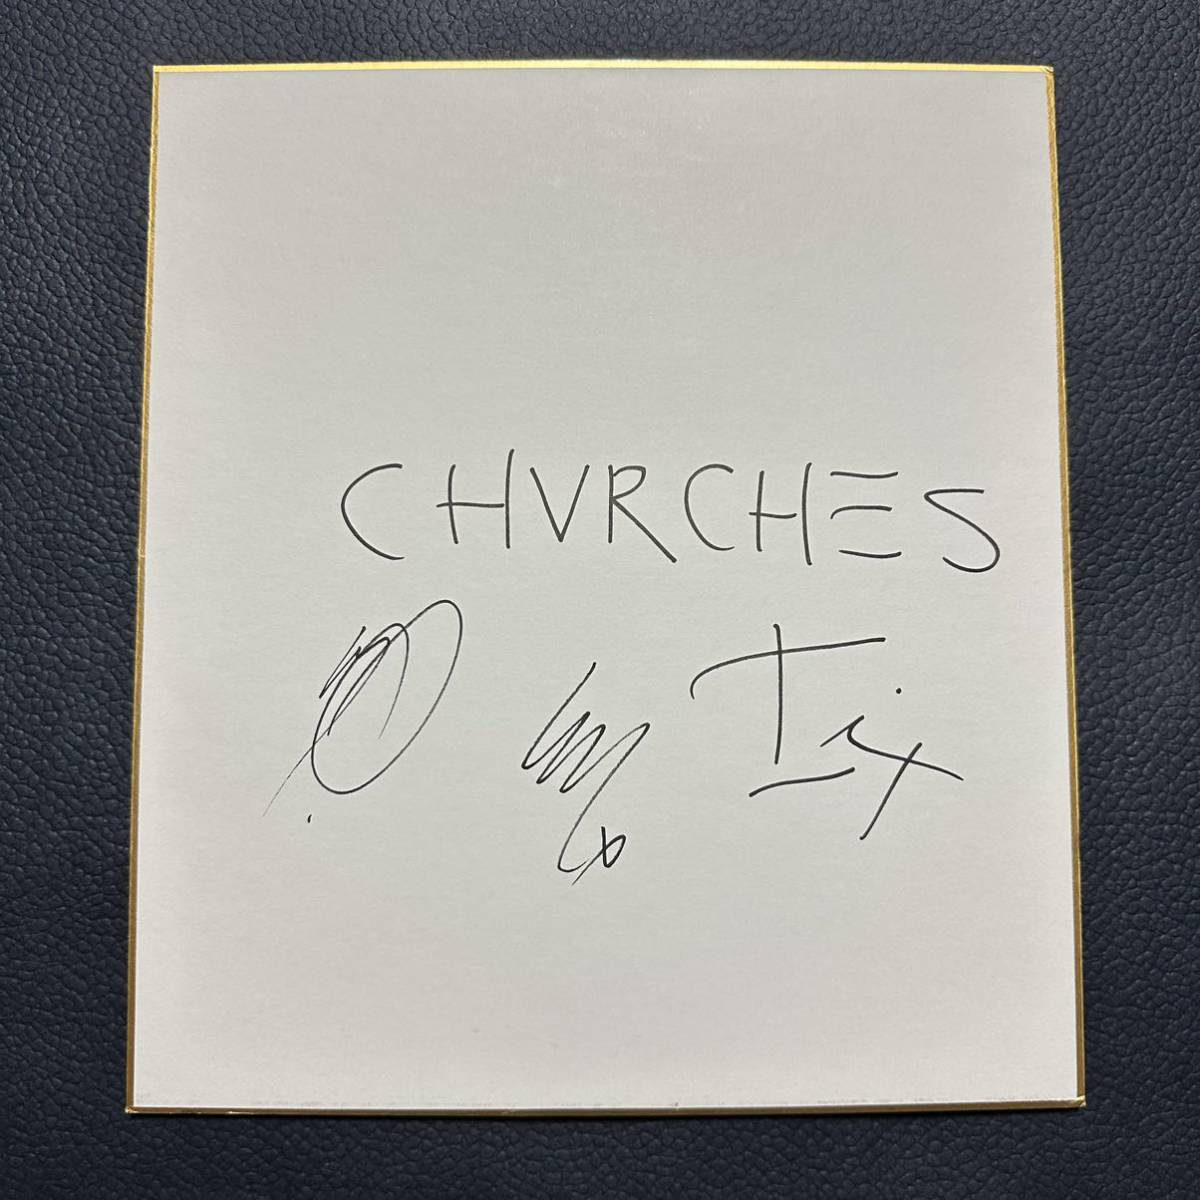 CHVRCHES Álbum de banda de rock de iglesias de papel de colores autografiado CD Maneskin Mneskin Marshmello Marshmello, Bienes de talento, firmar